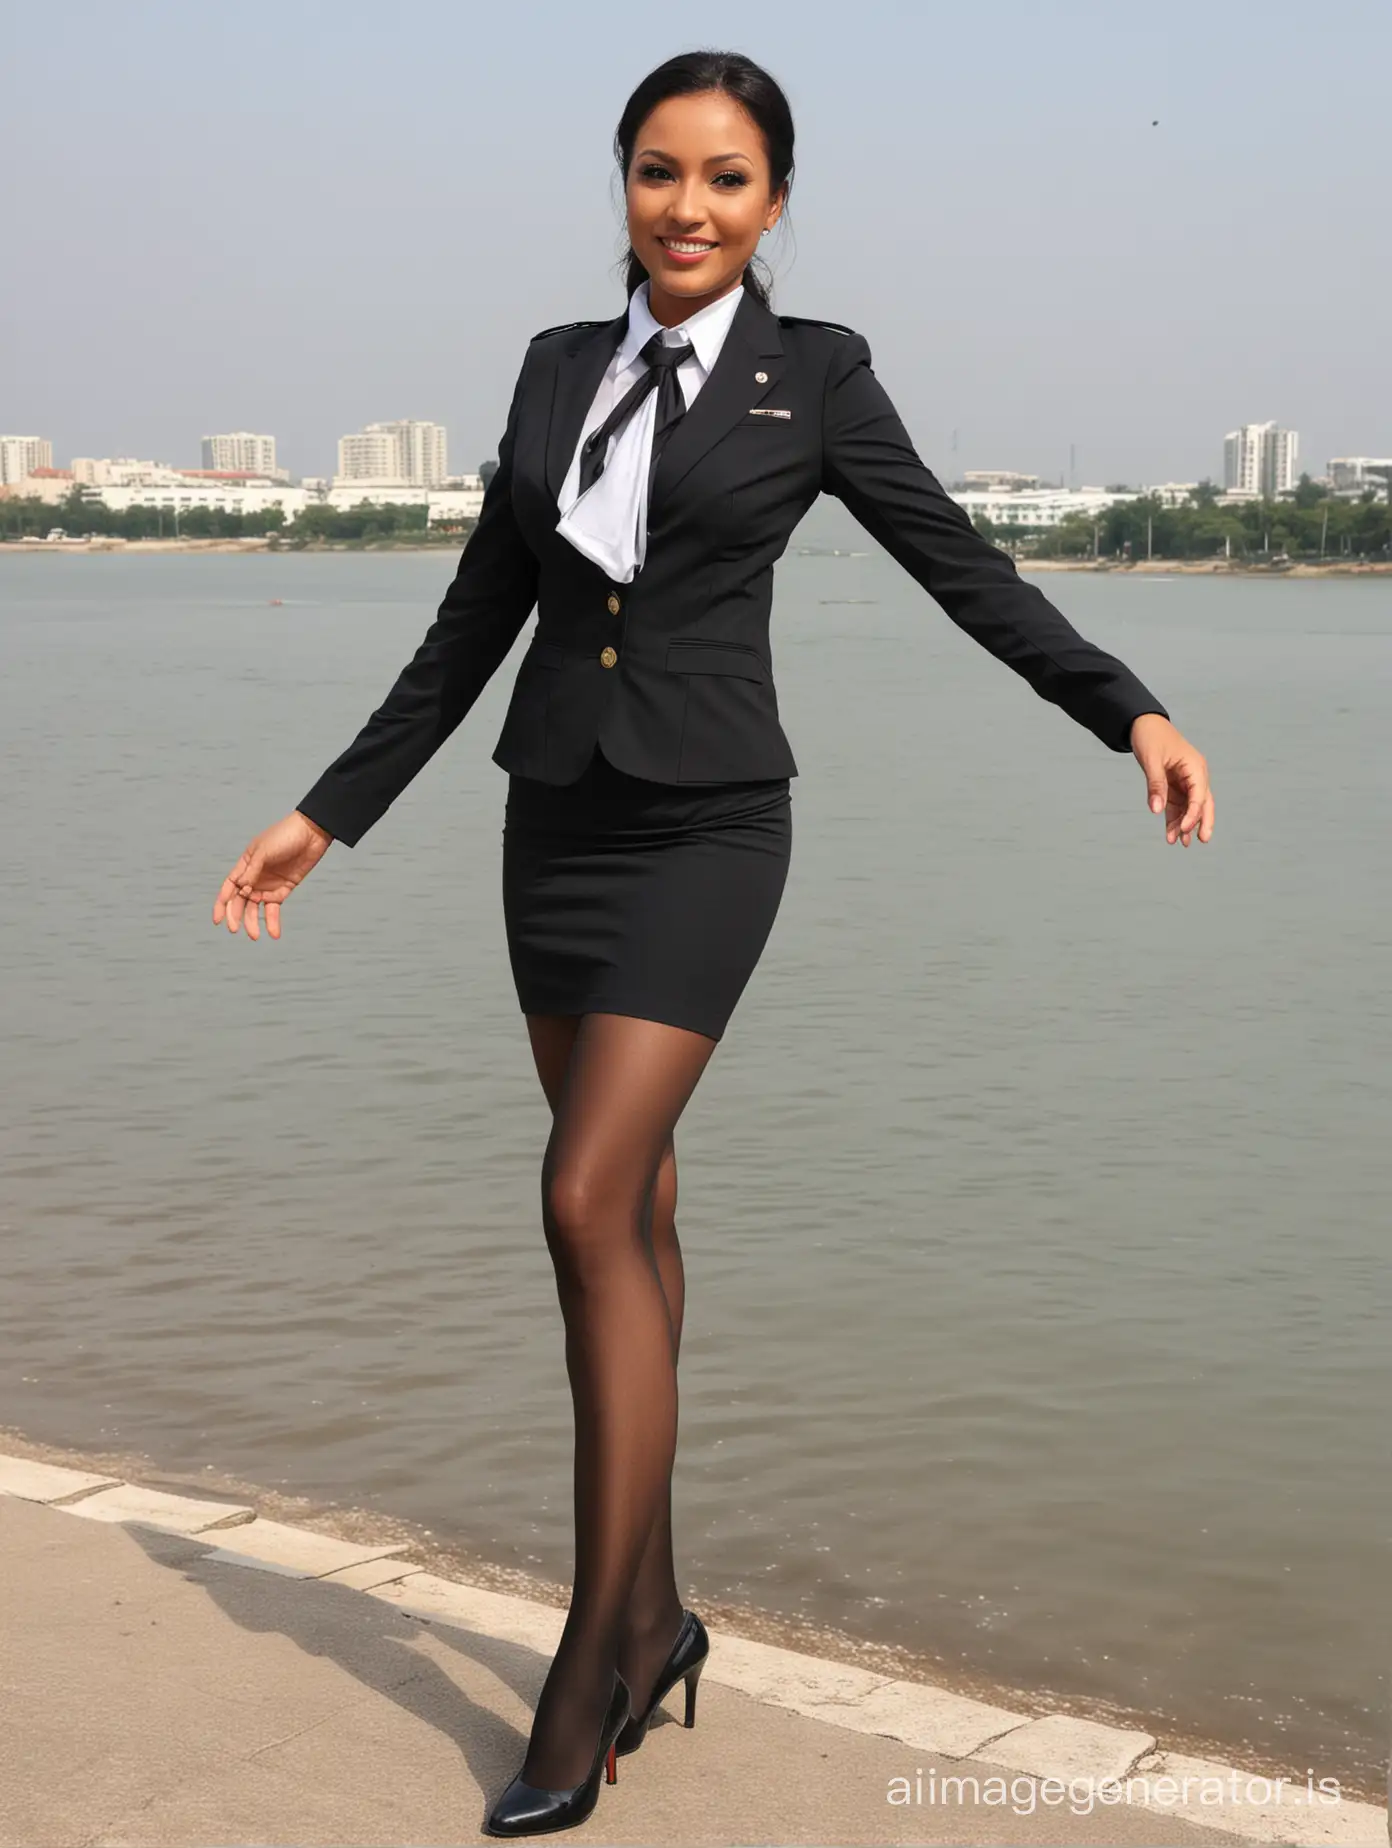 35 years old Africa sexy stewardess, black pantyhose, leg swift up at riverside